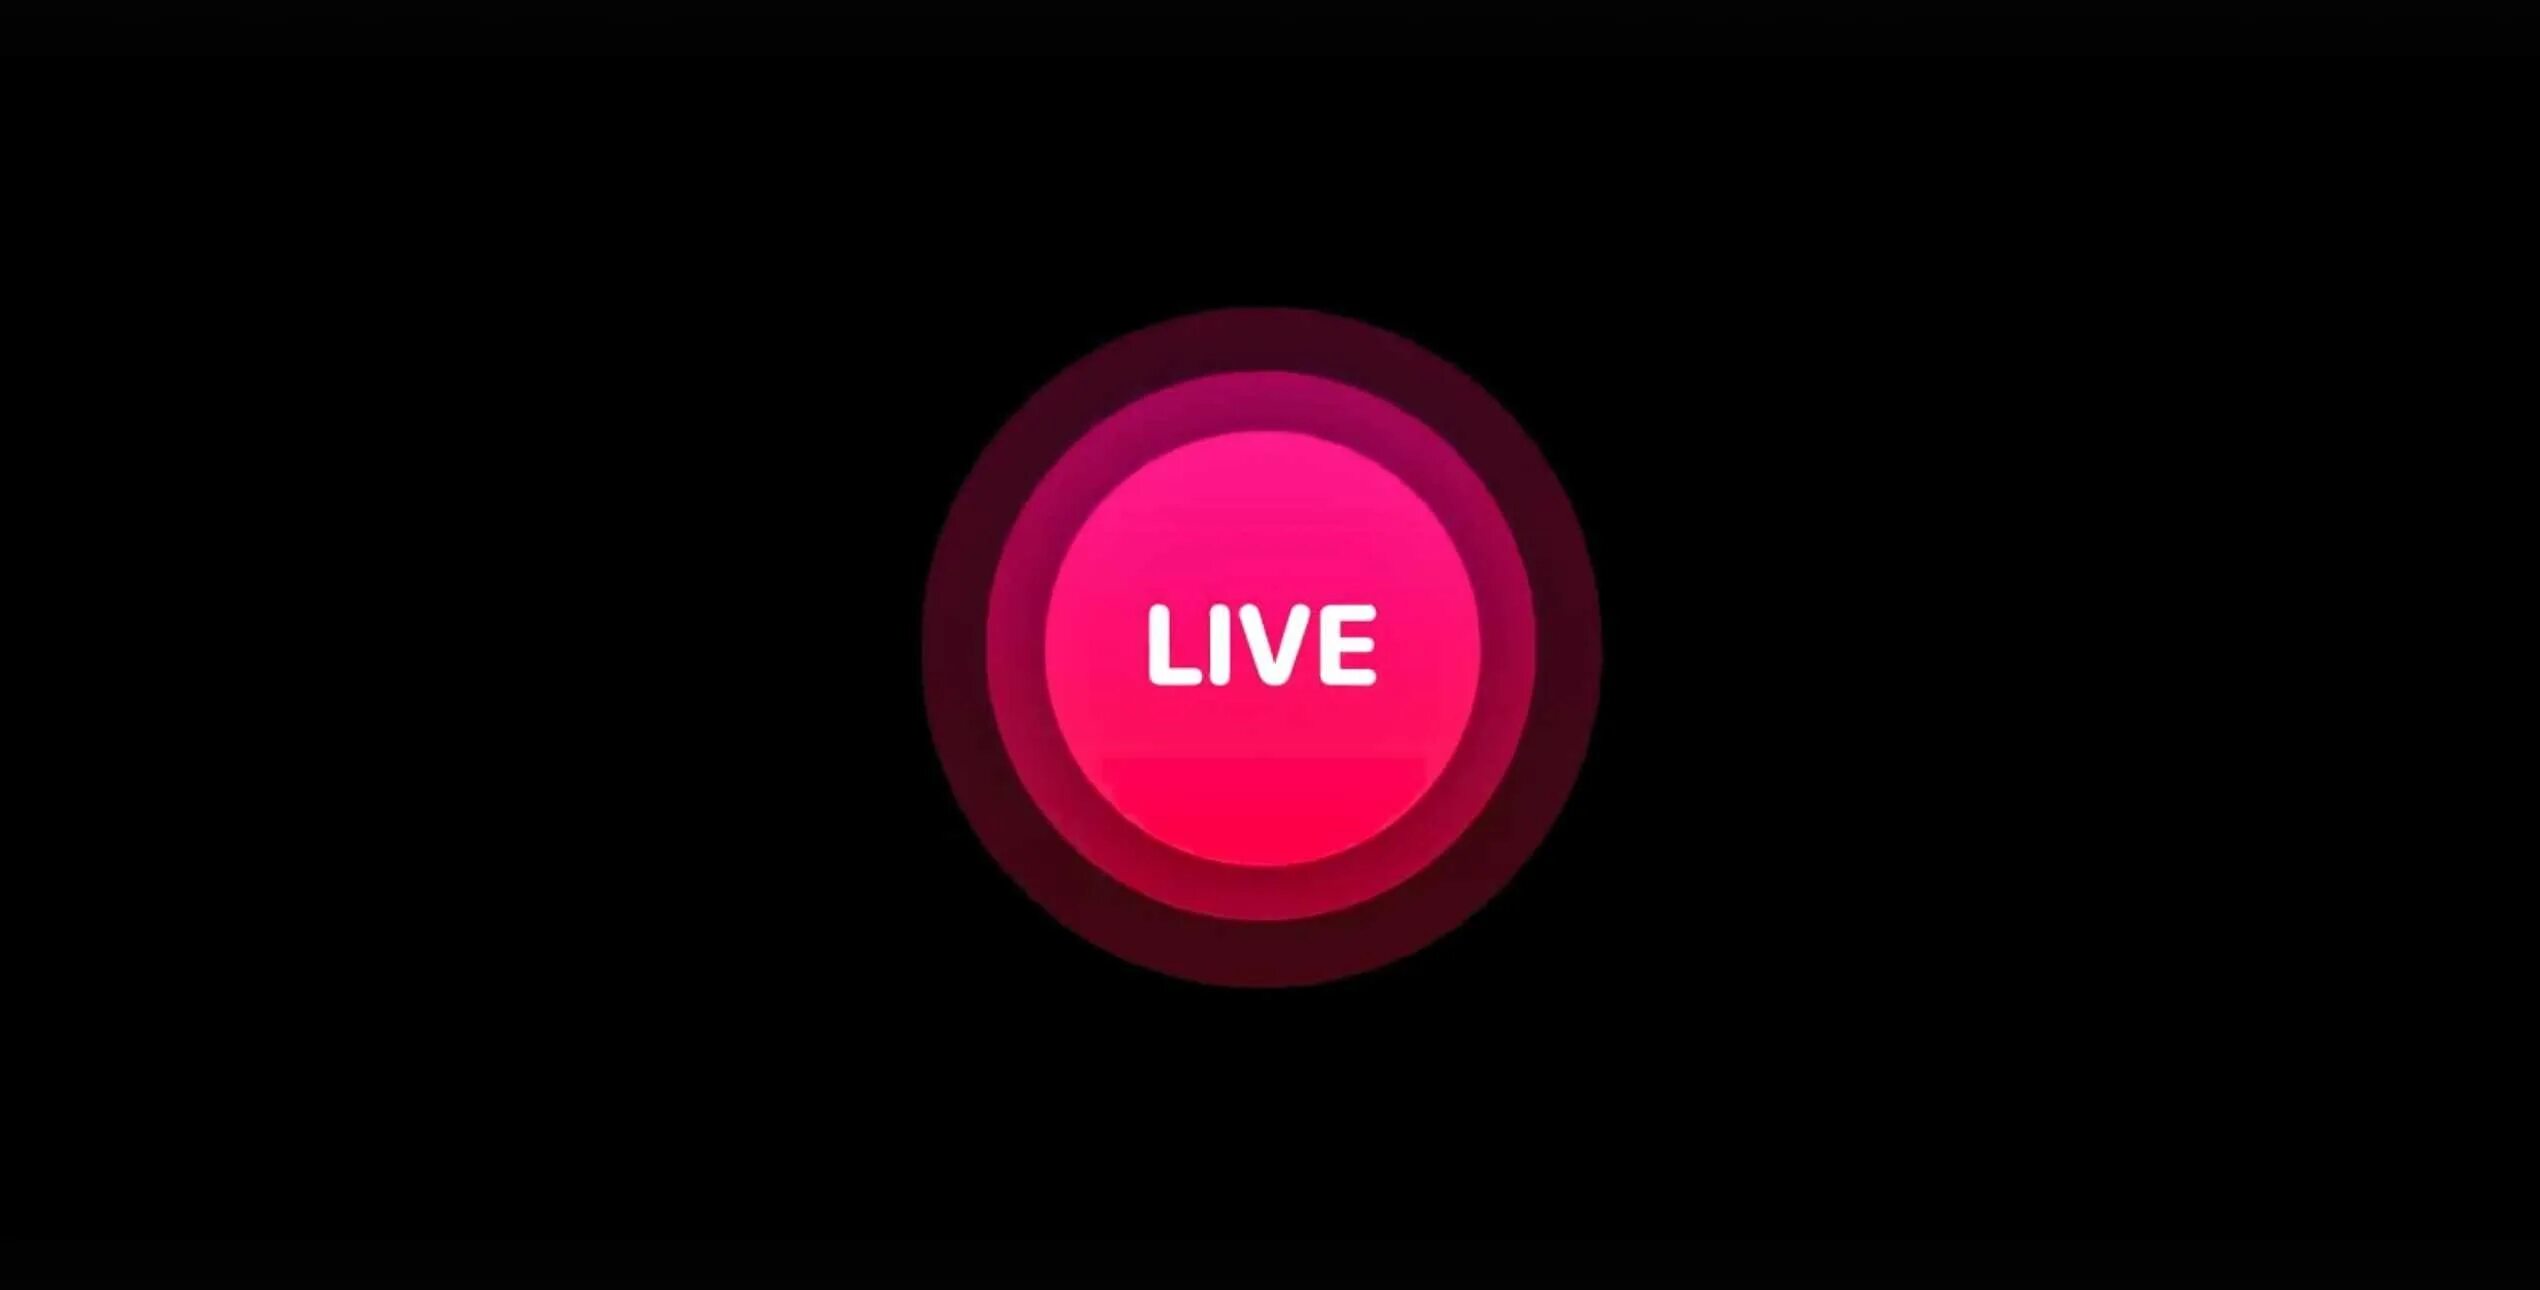 Life прямая трансляция. Live прямой эфир. Прямая трансляция значок. Live логотип. Значок Live для стрима.